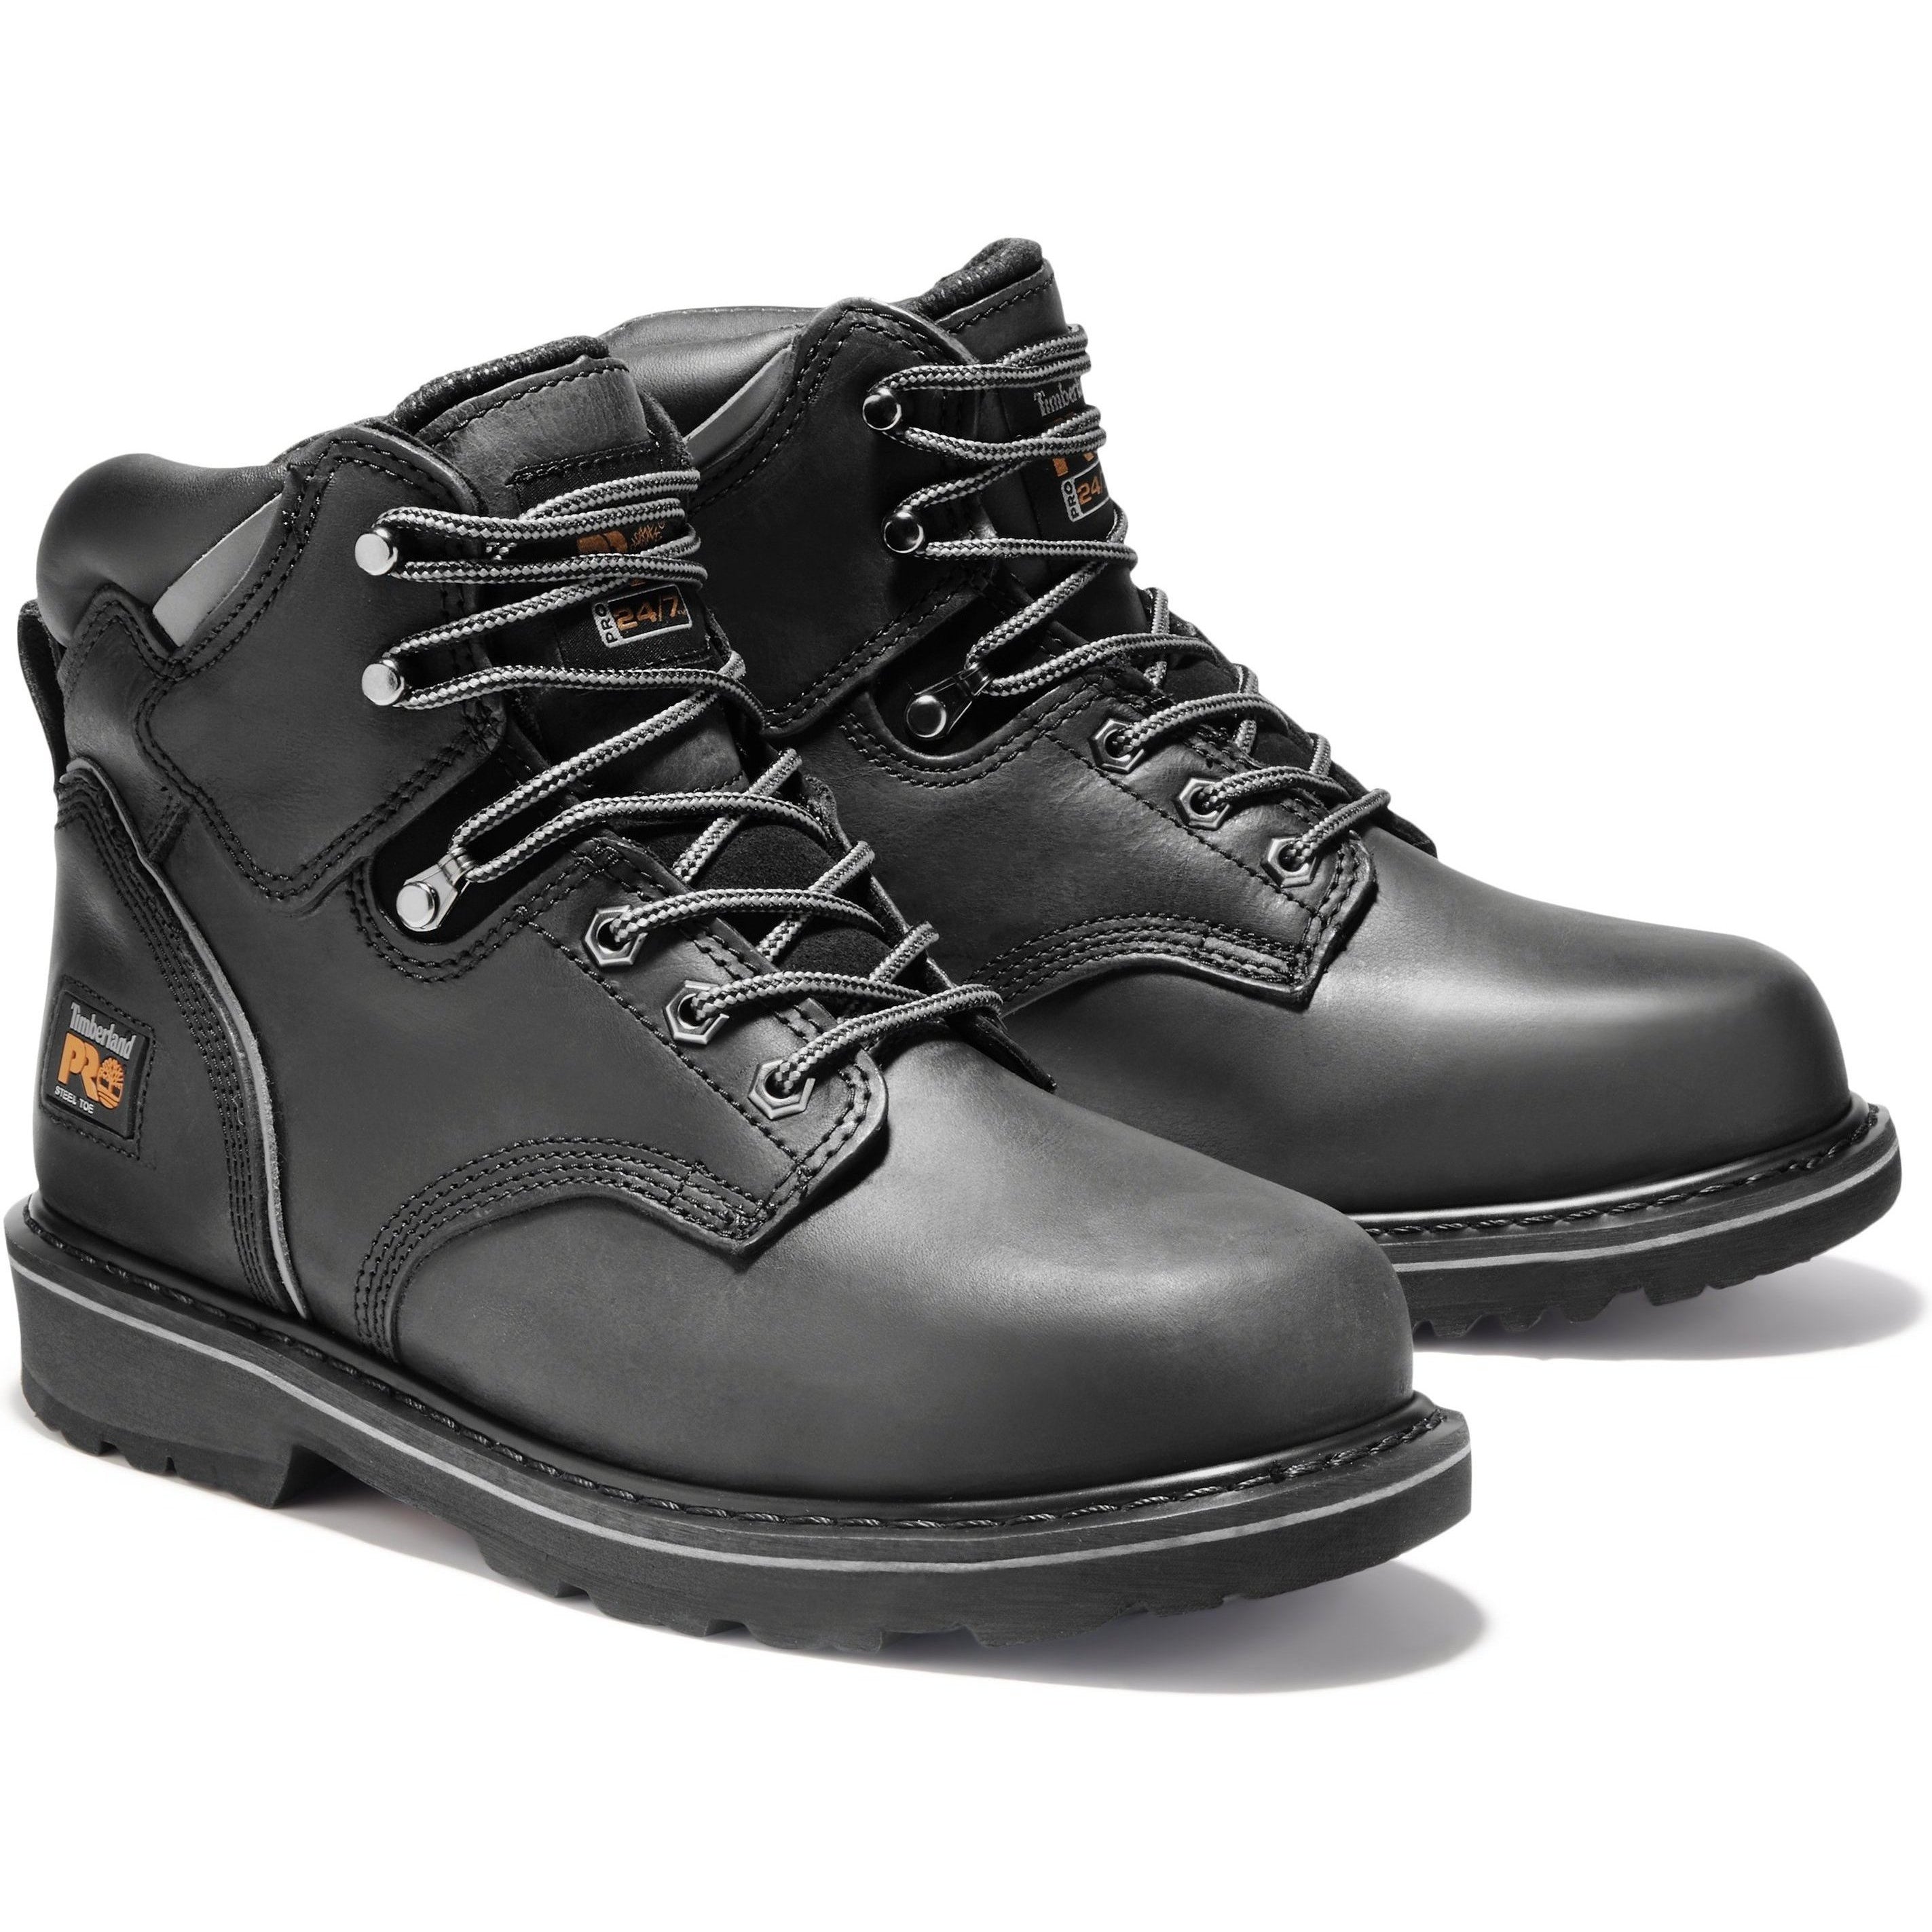 Timberland PRO Men's Pit Boss 6" Steel Toe Work Boot - TB033032001 7 / Medium / Black Oiled Nubuck - Overlook Boots